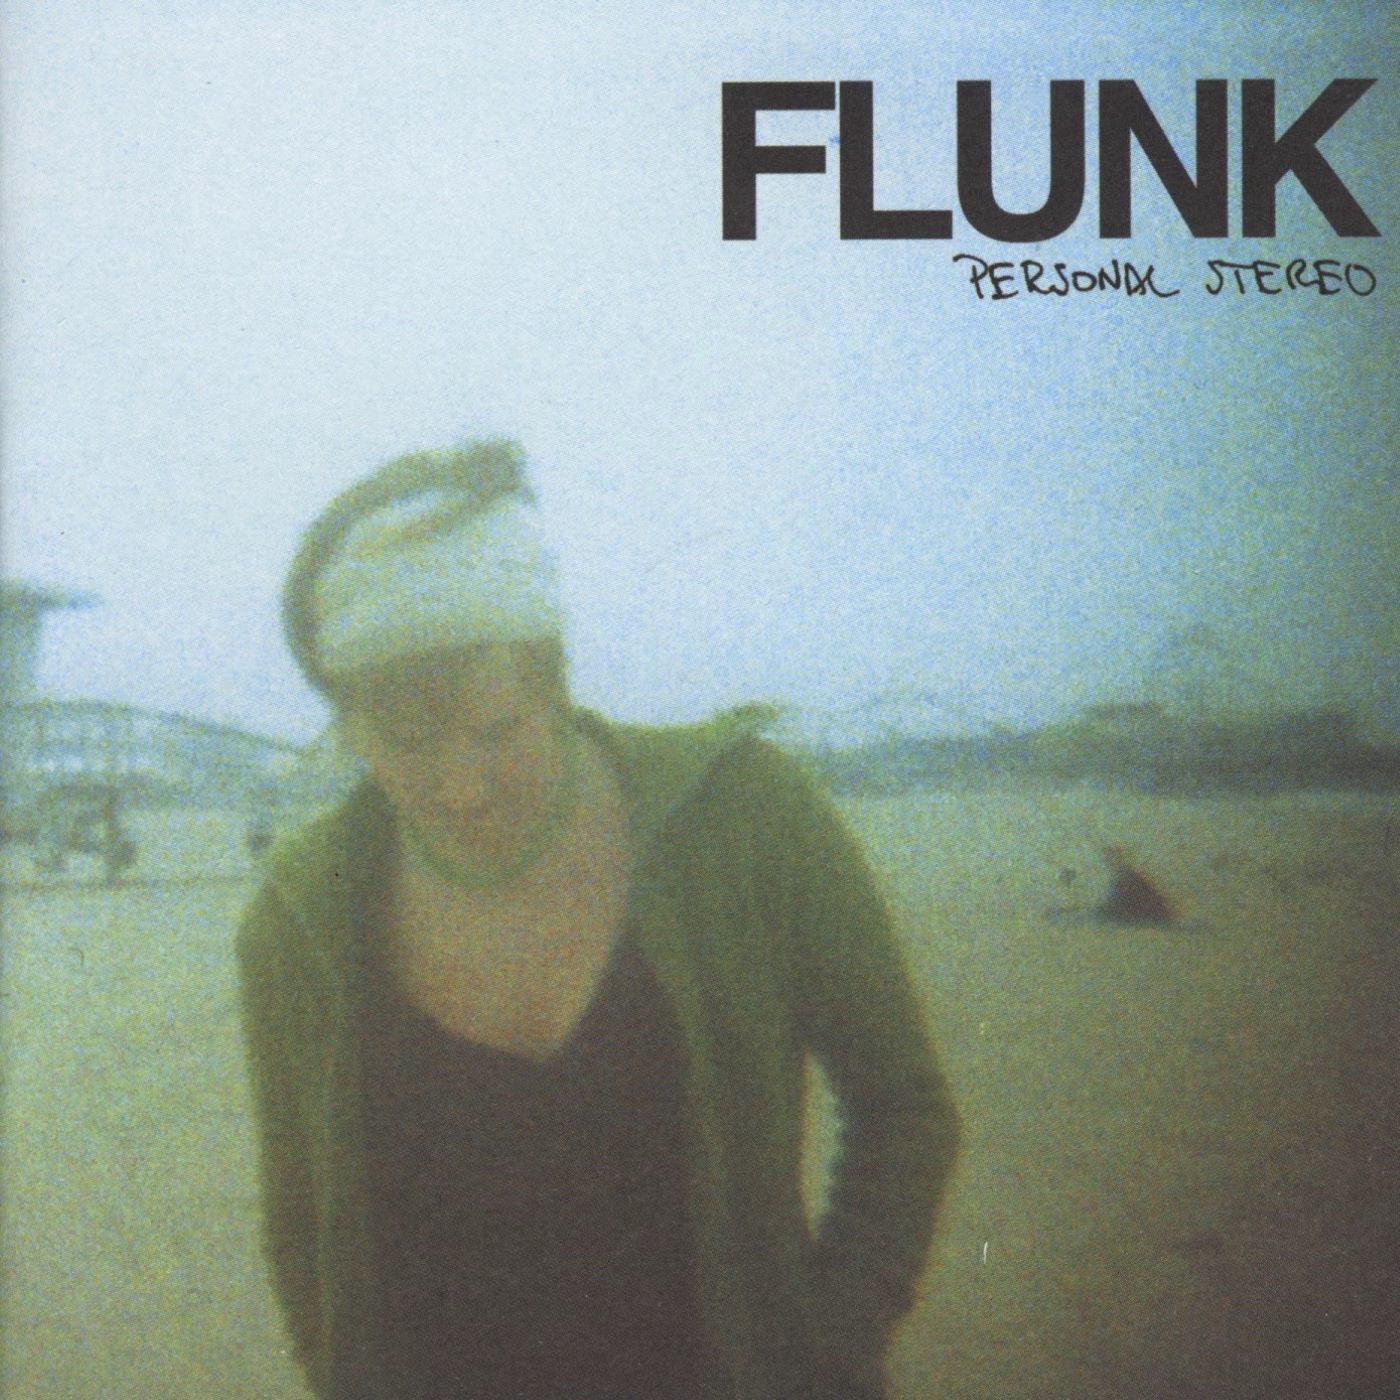 Flunk – Personal Stereo (Beatservice)